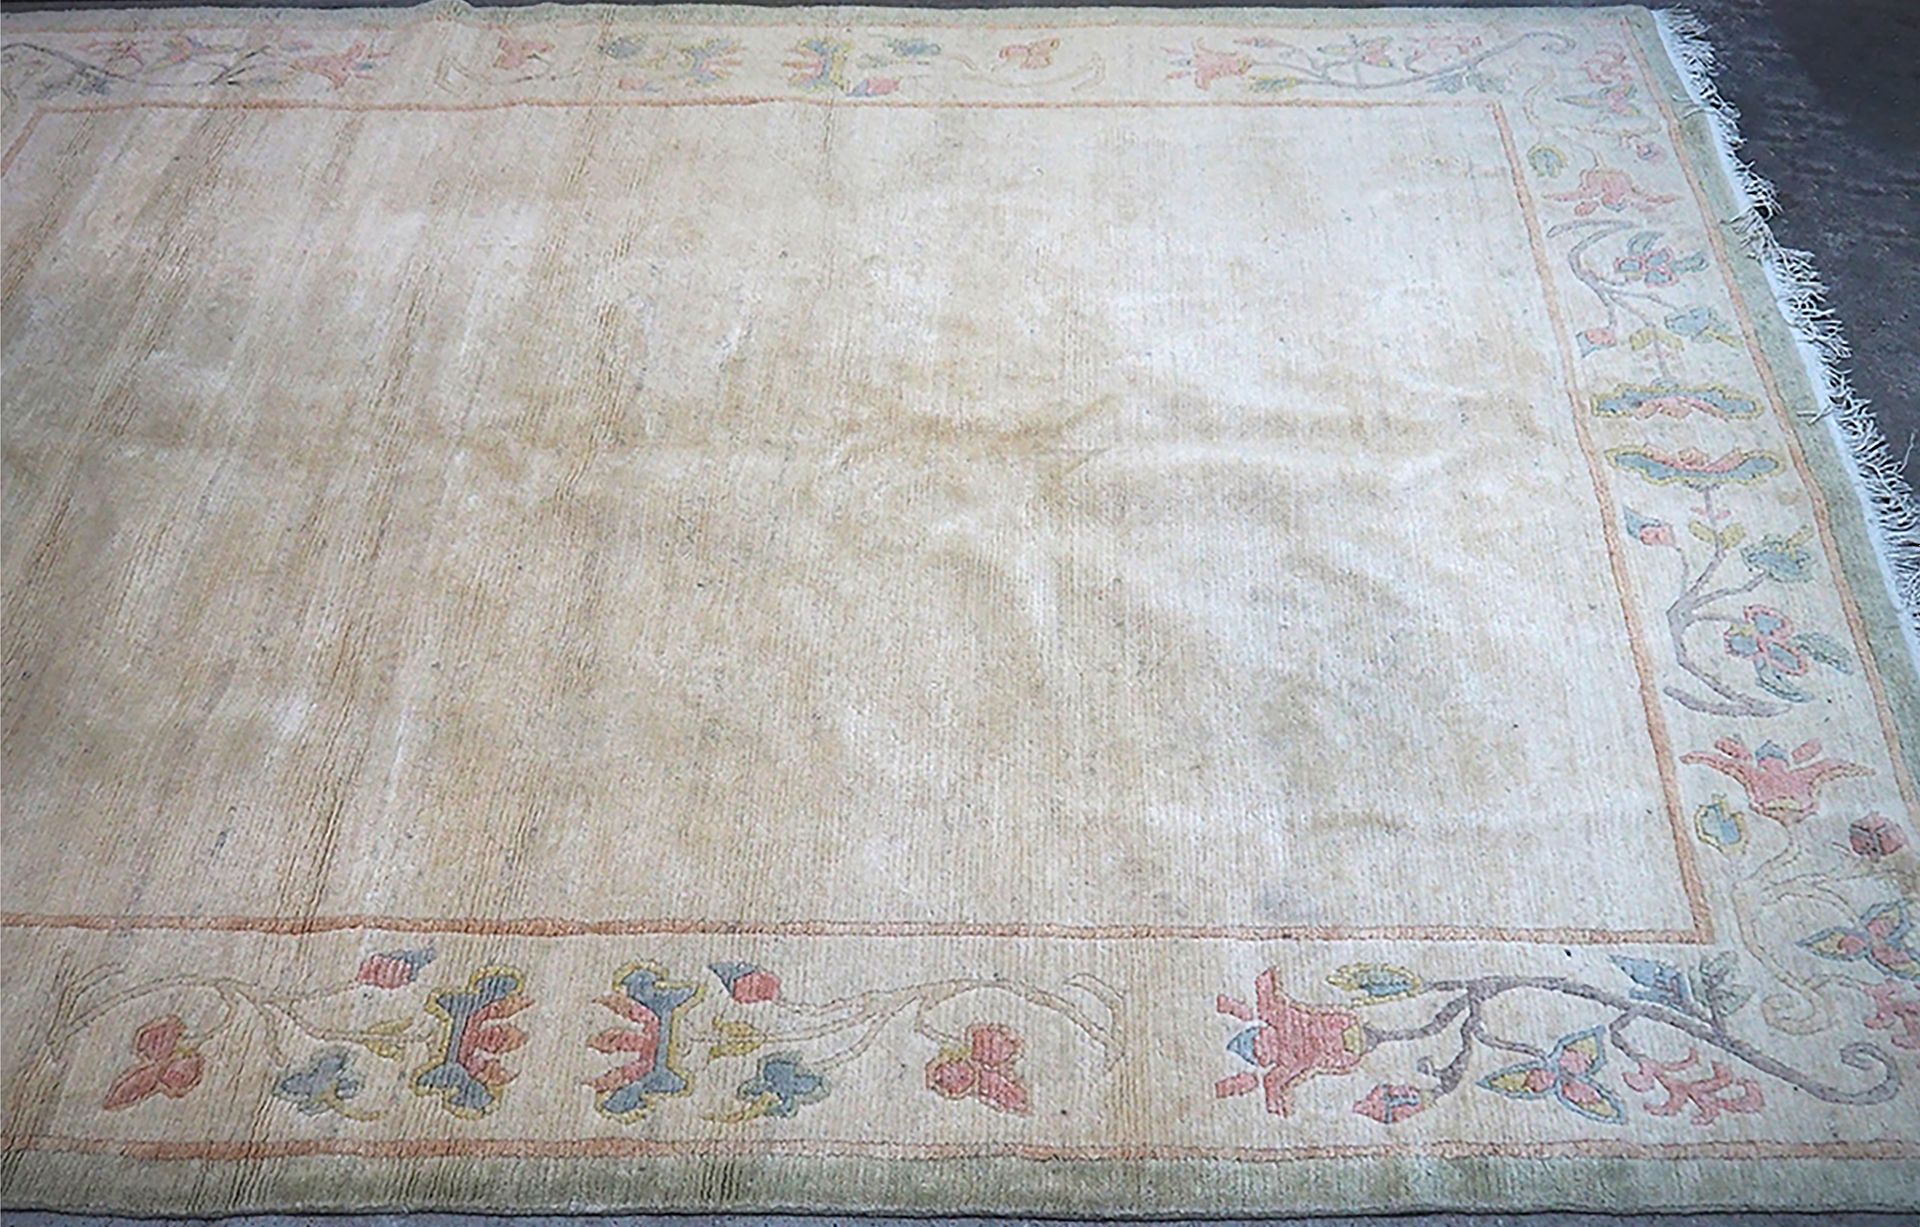 Null 尼泊尔大地毯

约1980年

尺寸：280 x 180 cm

羊毛天鹅绒，棉质底板

总体状况良好

普通的米色领域

奶油色边框与粉色花环